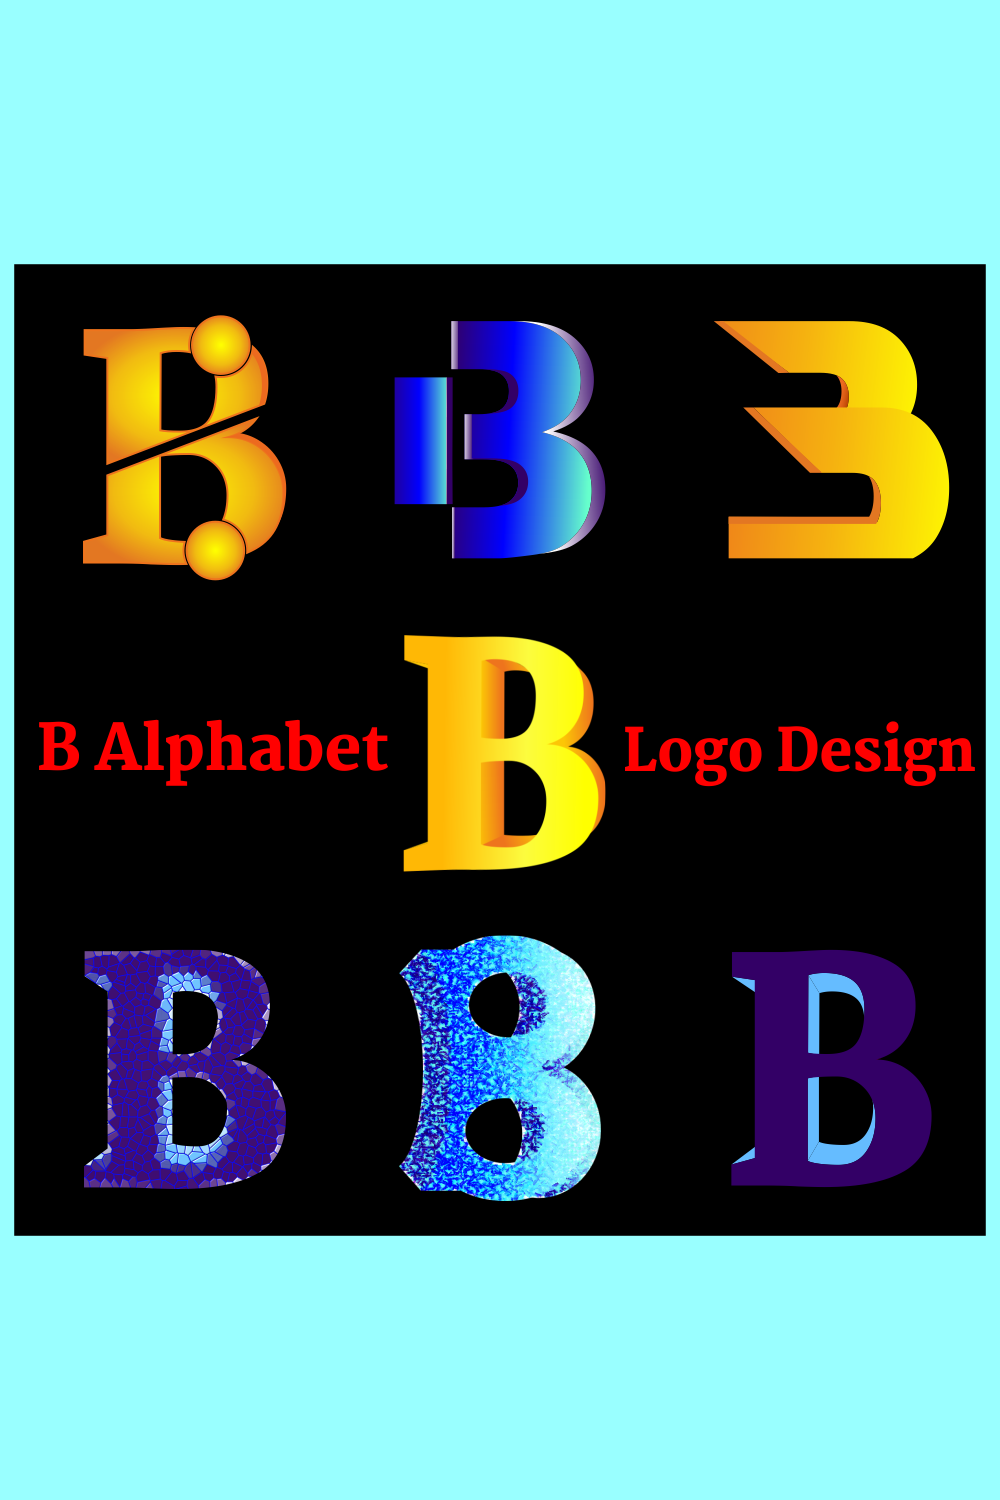 B alphabet logo design pinterest preview image.